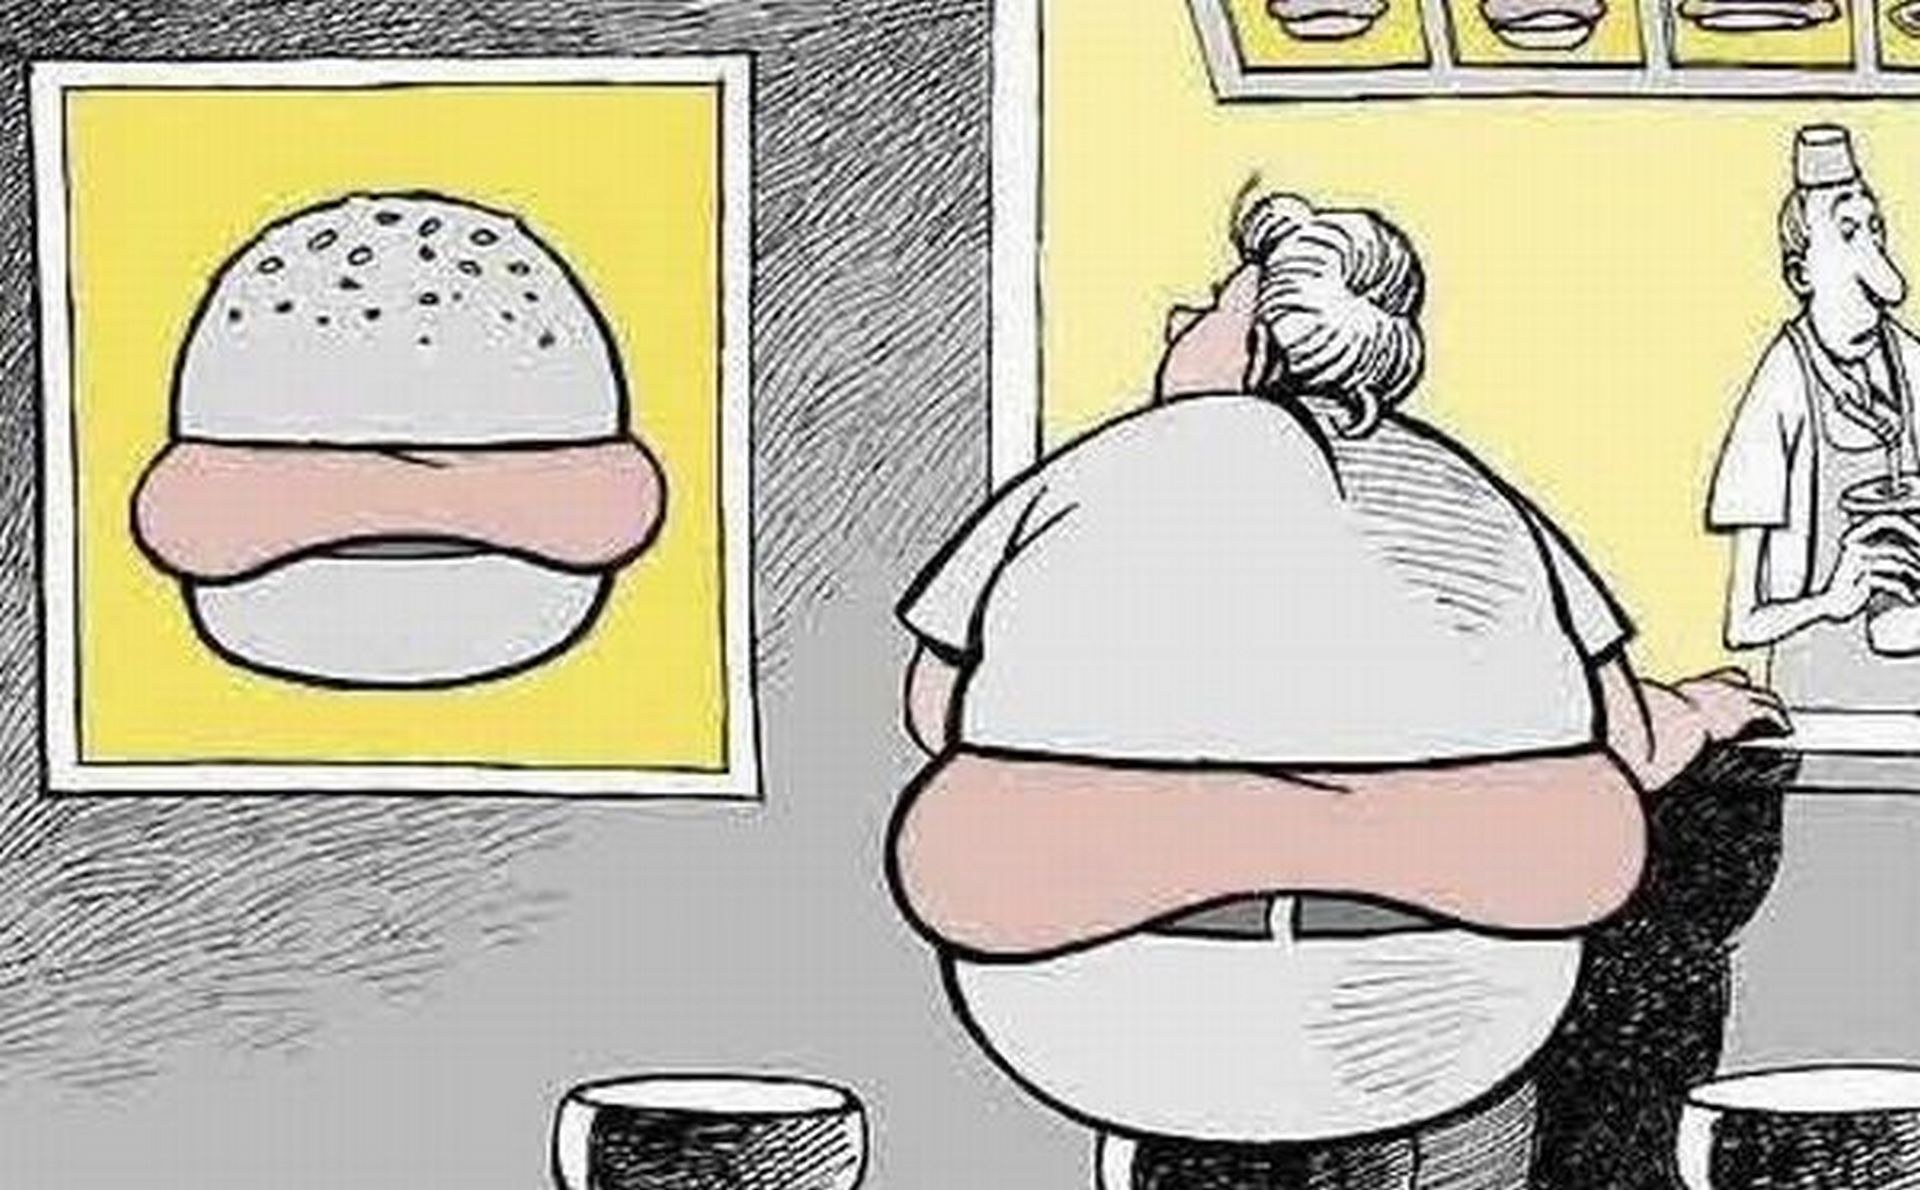 Мемы про толстых